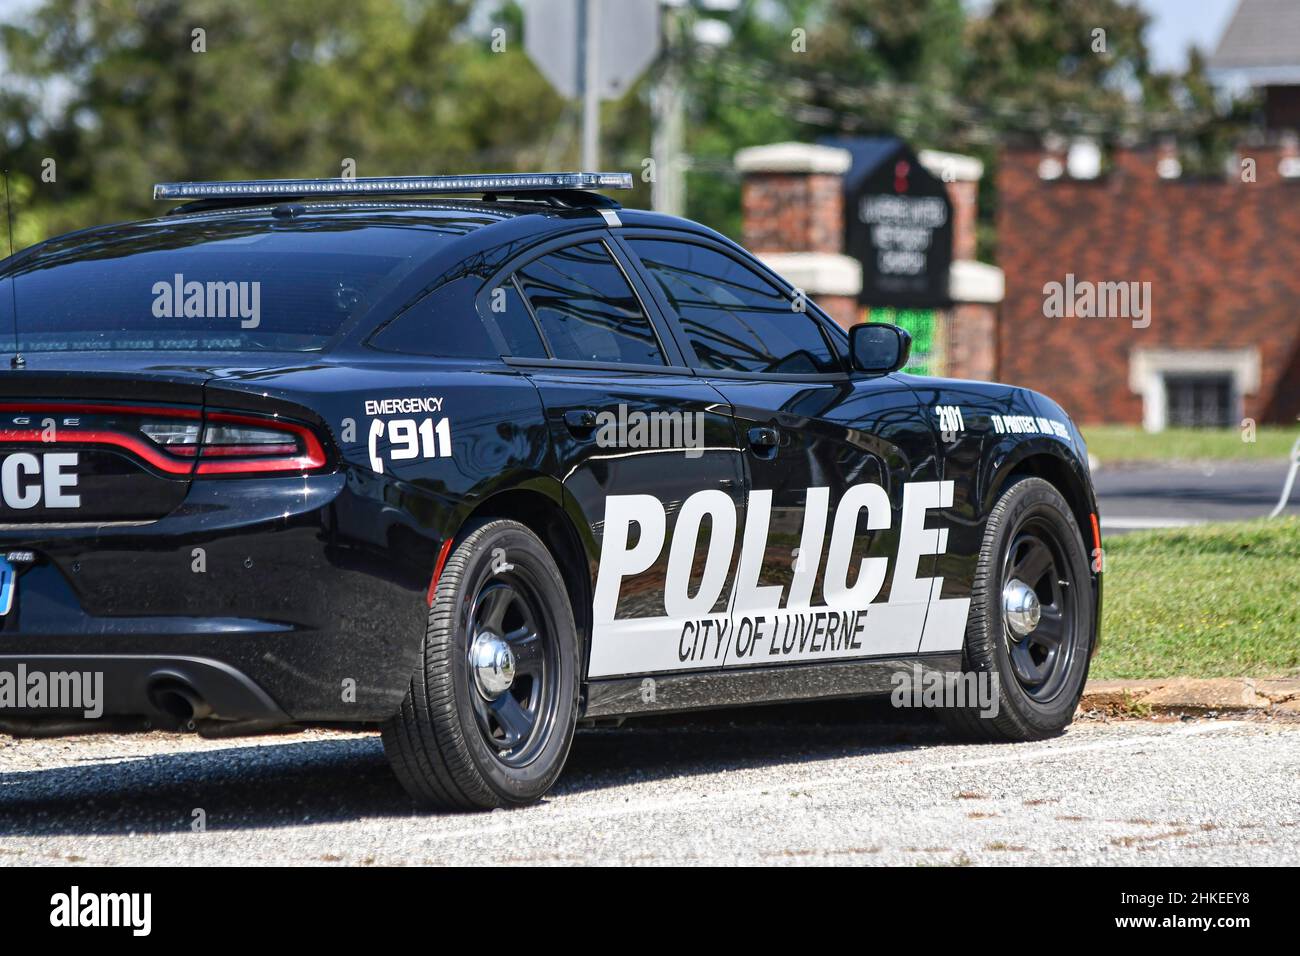 Luverne, Alabama, USA- April 21, 2021: City of Luverne Police car parked. Stock Photo